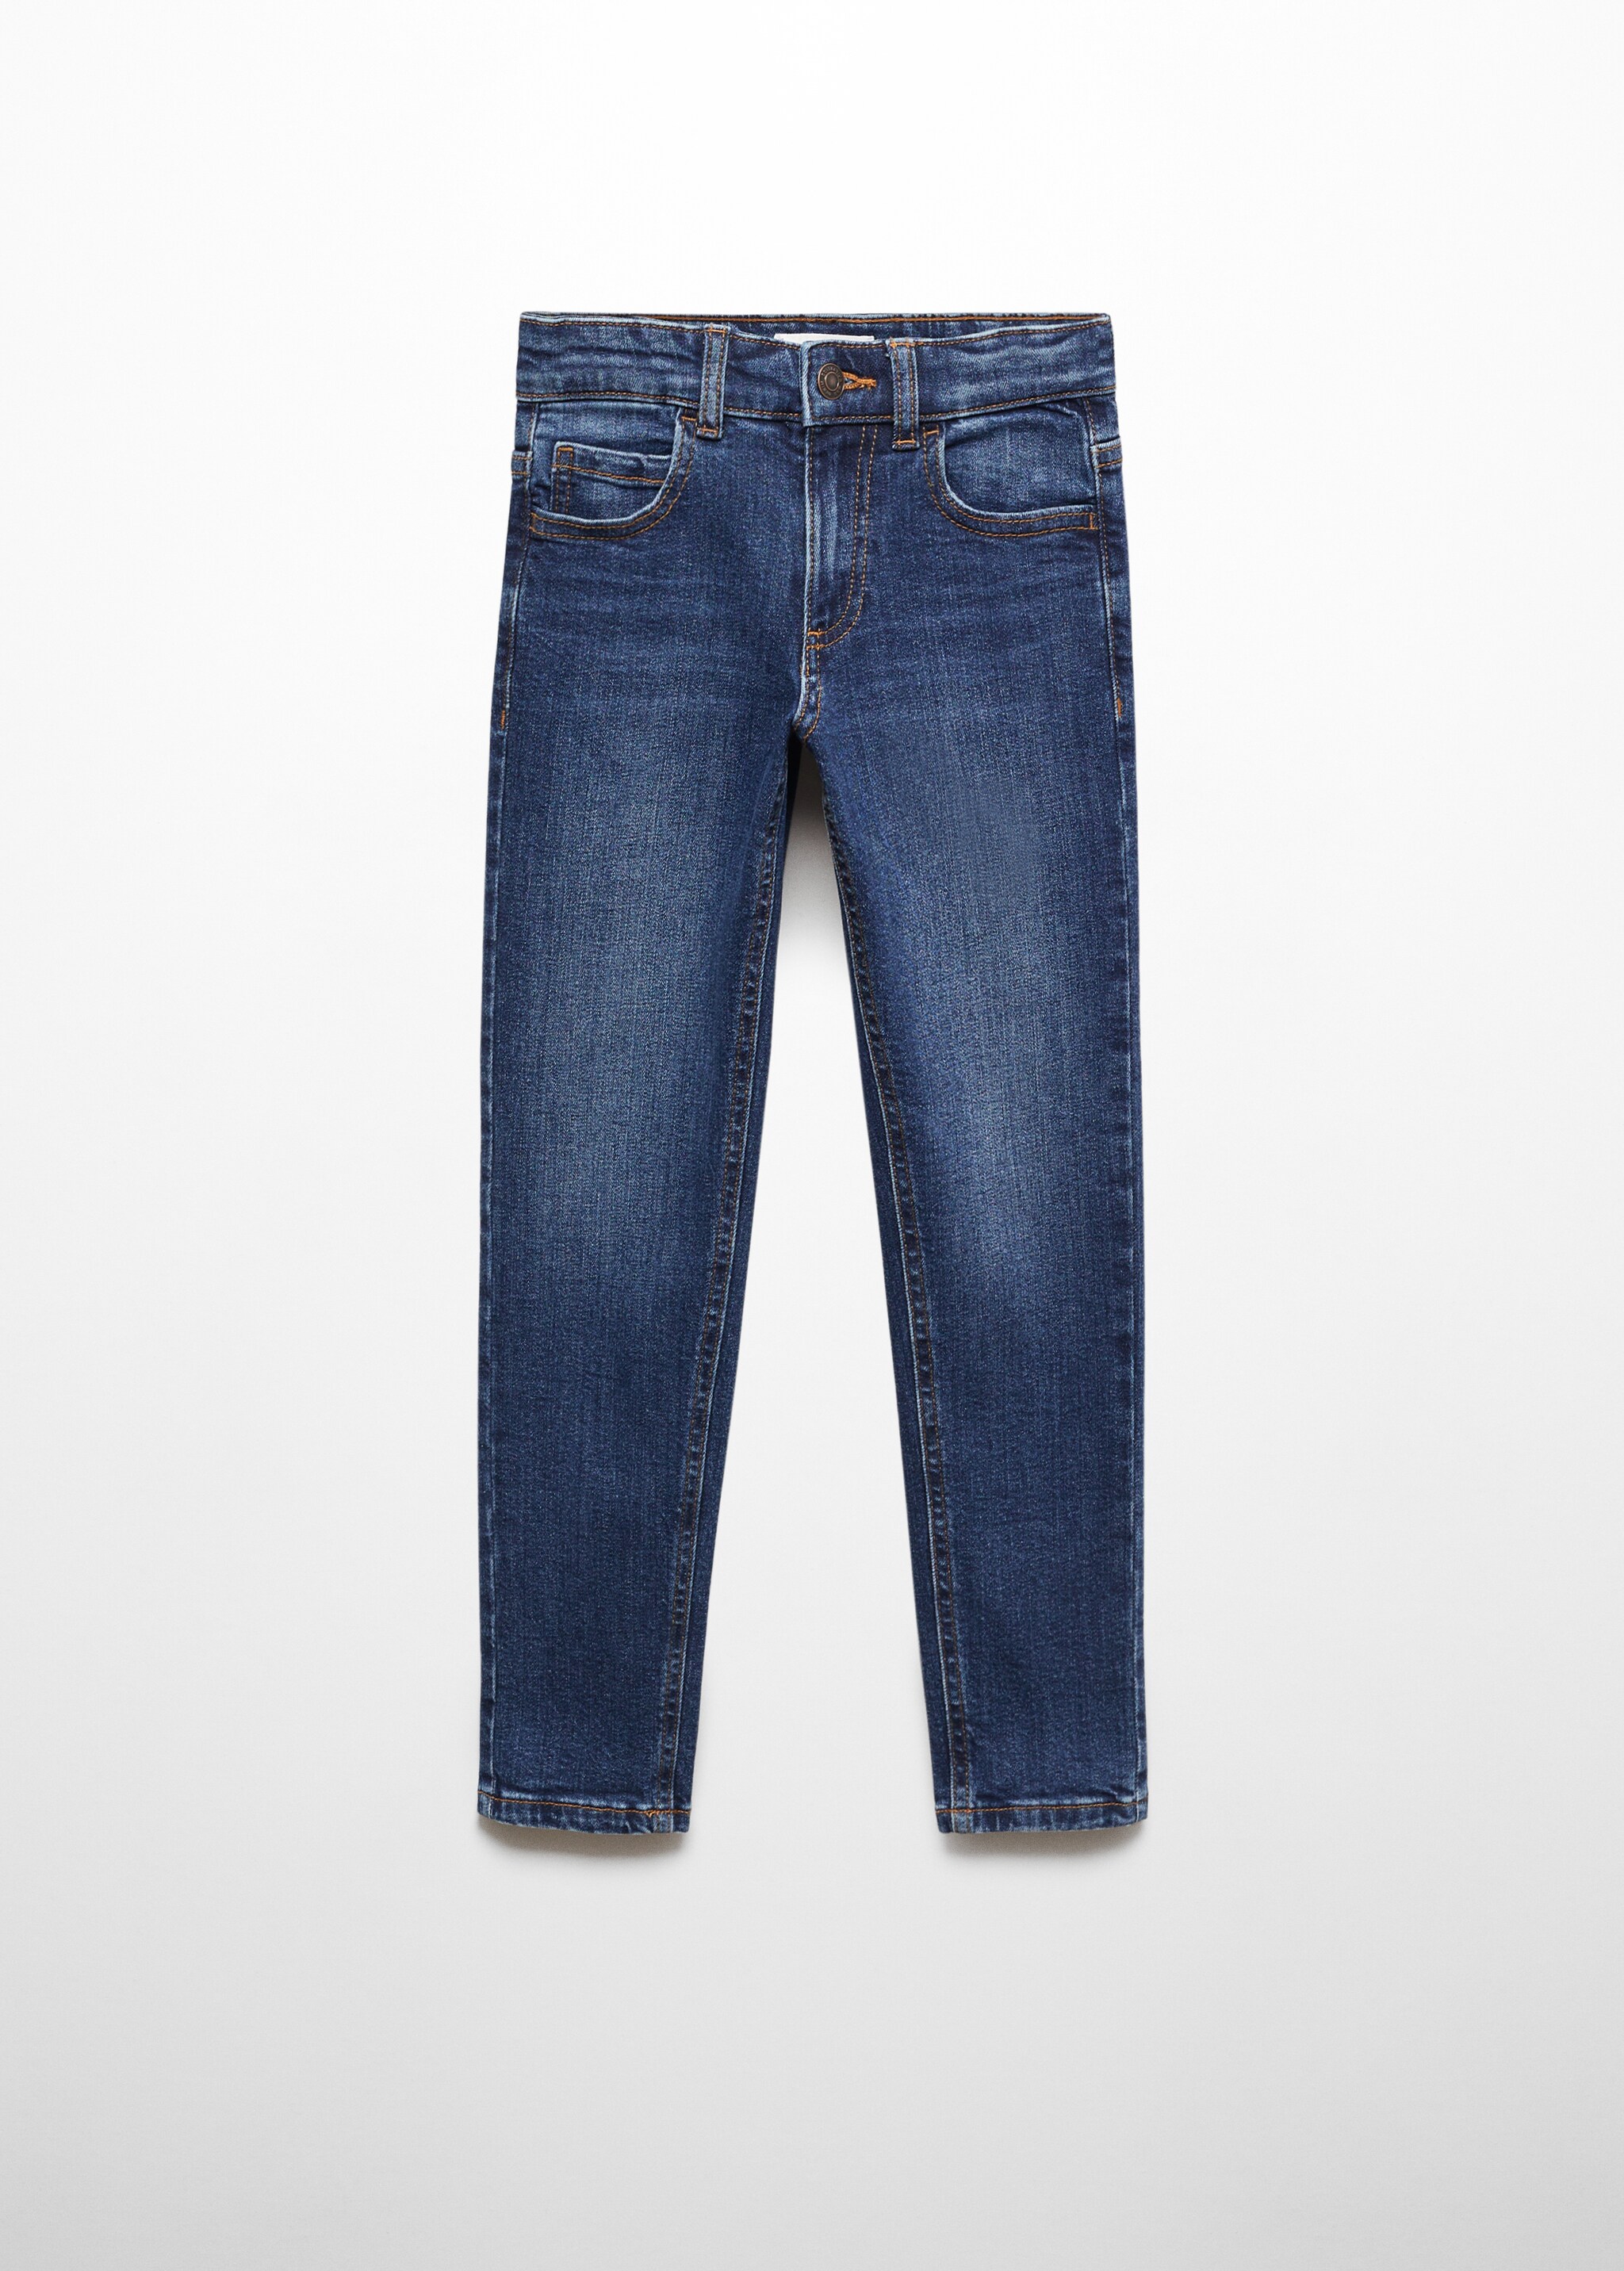 Slim-fit jeans - Изделие без модели